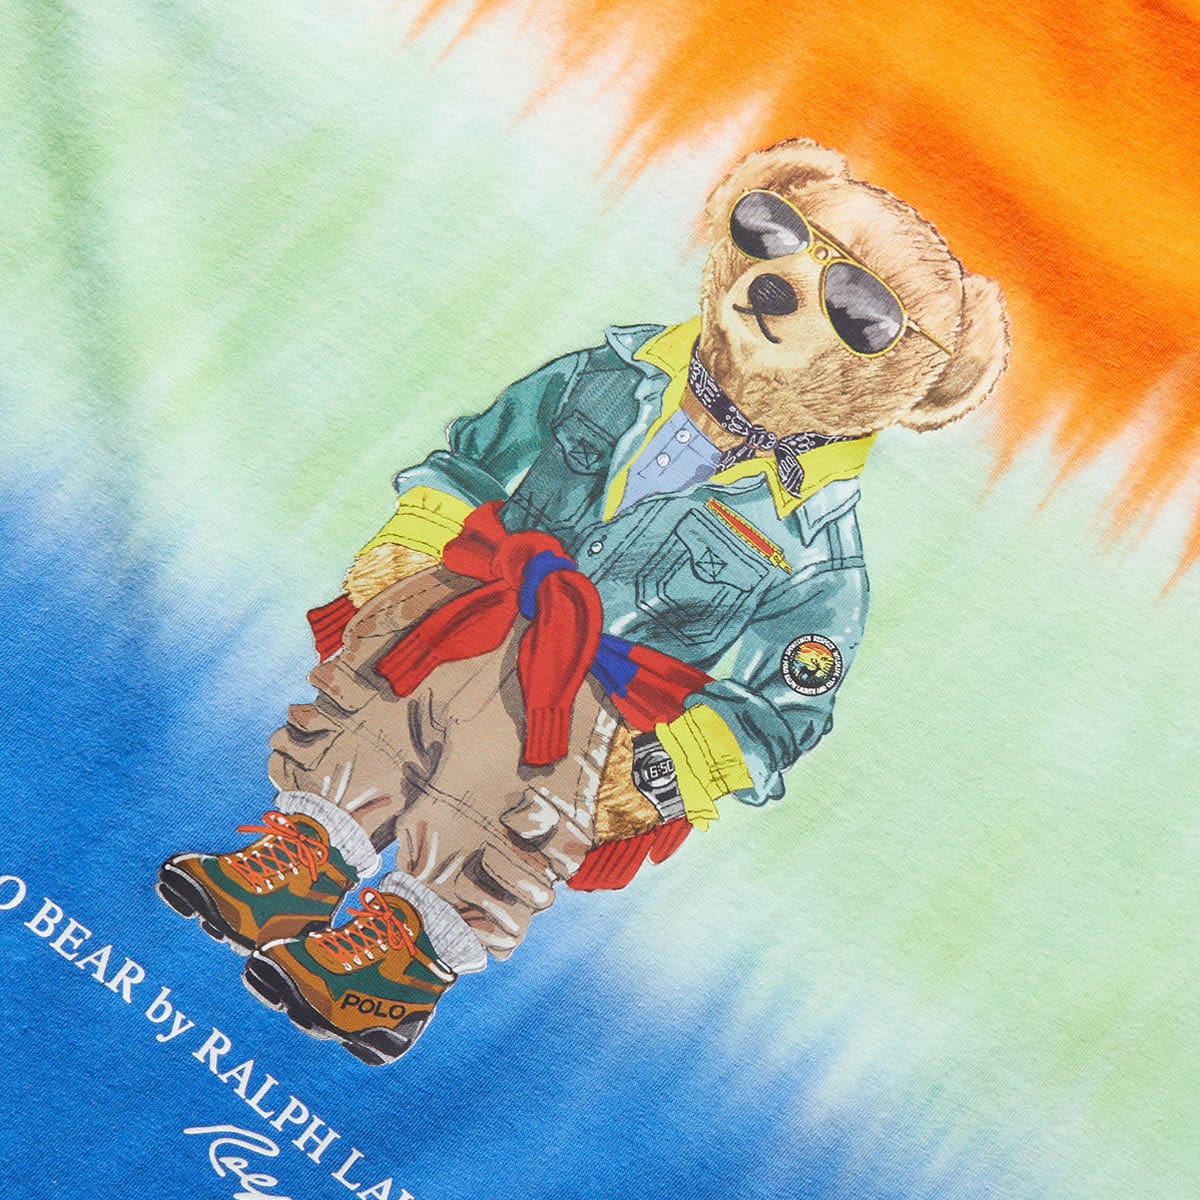 Polo Ralph Lauren T-Shirts VOYAGER BEAR TIE-DYE T-SHIRT